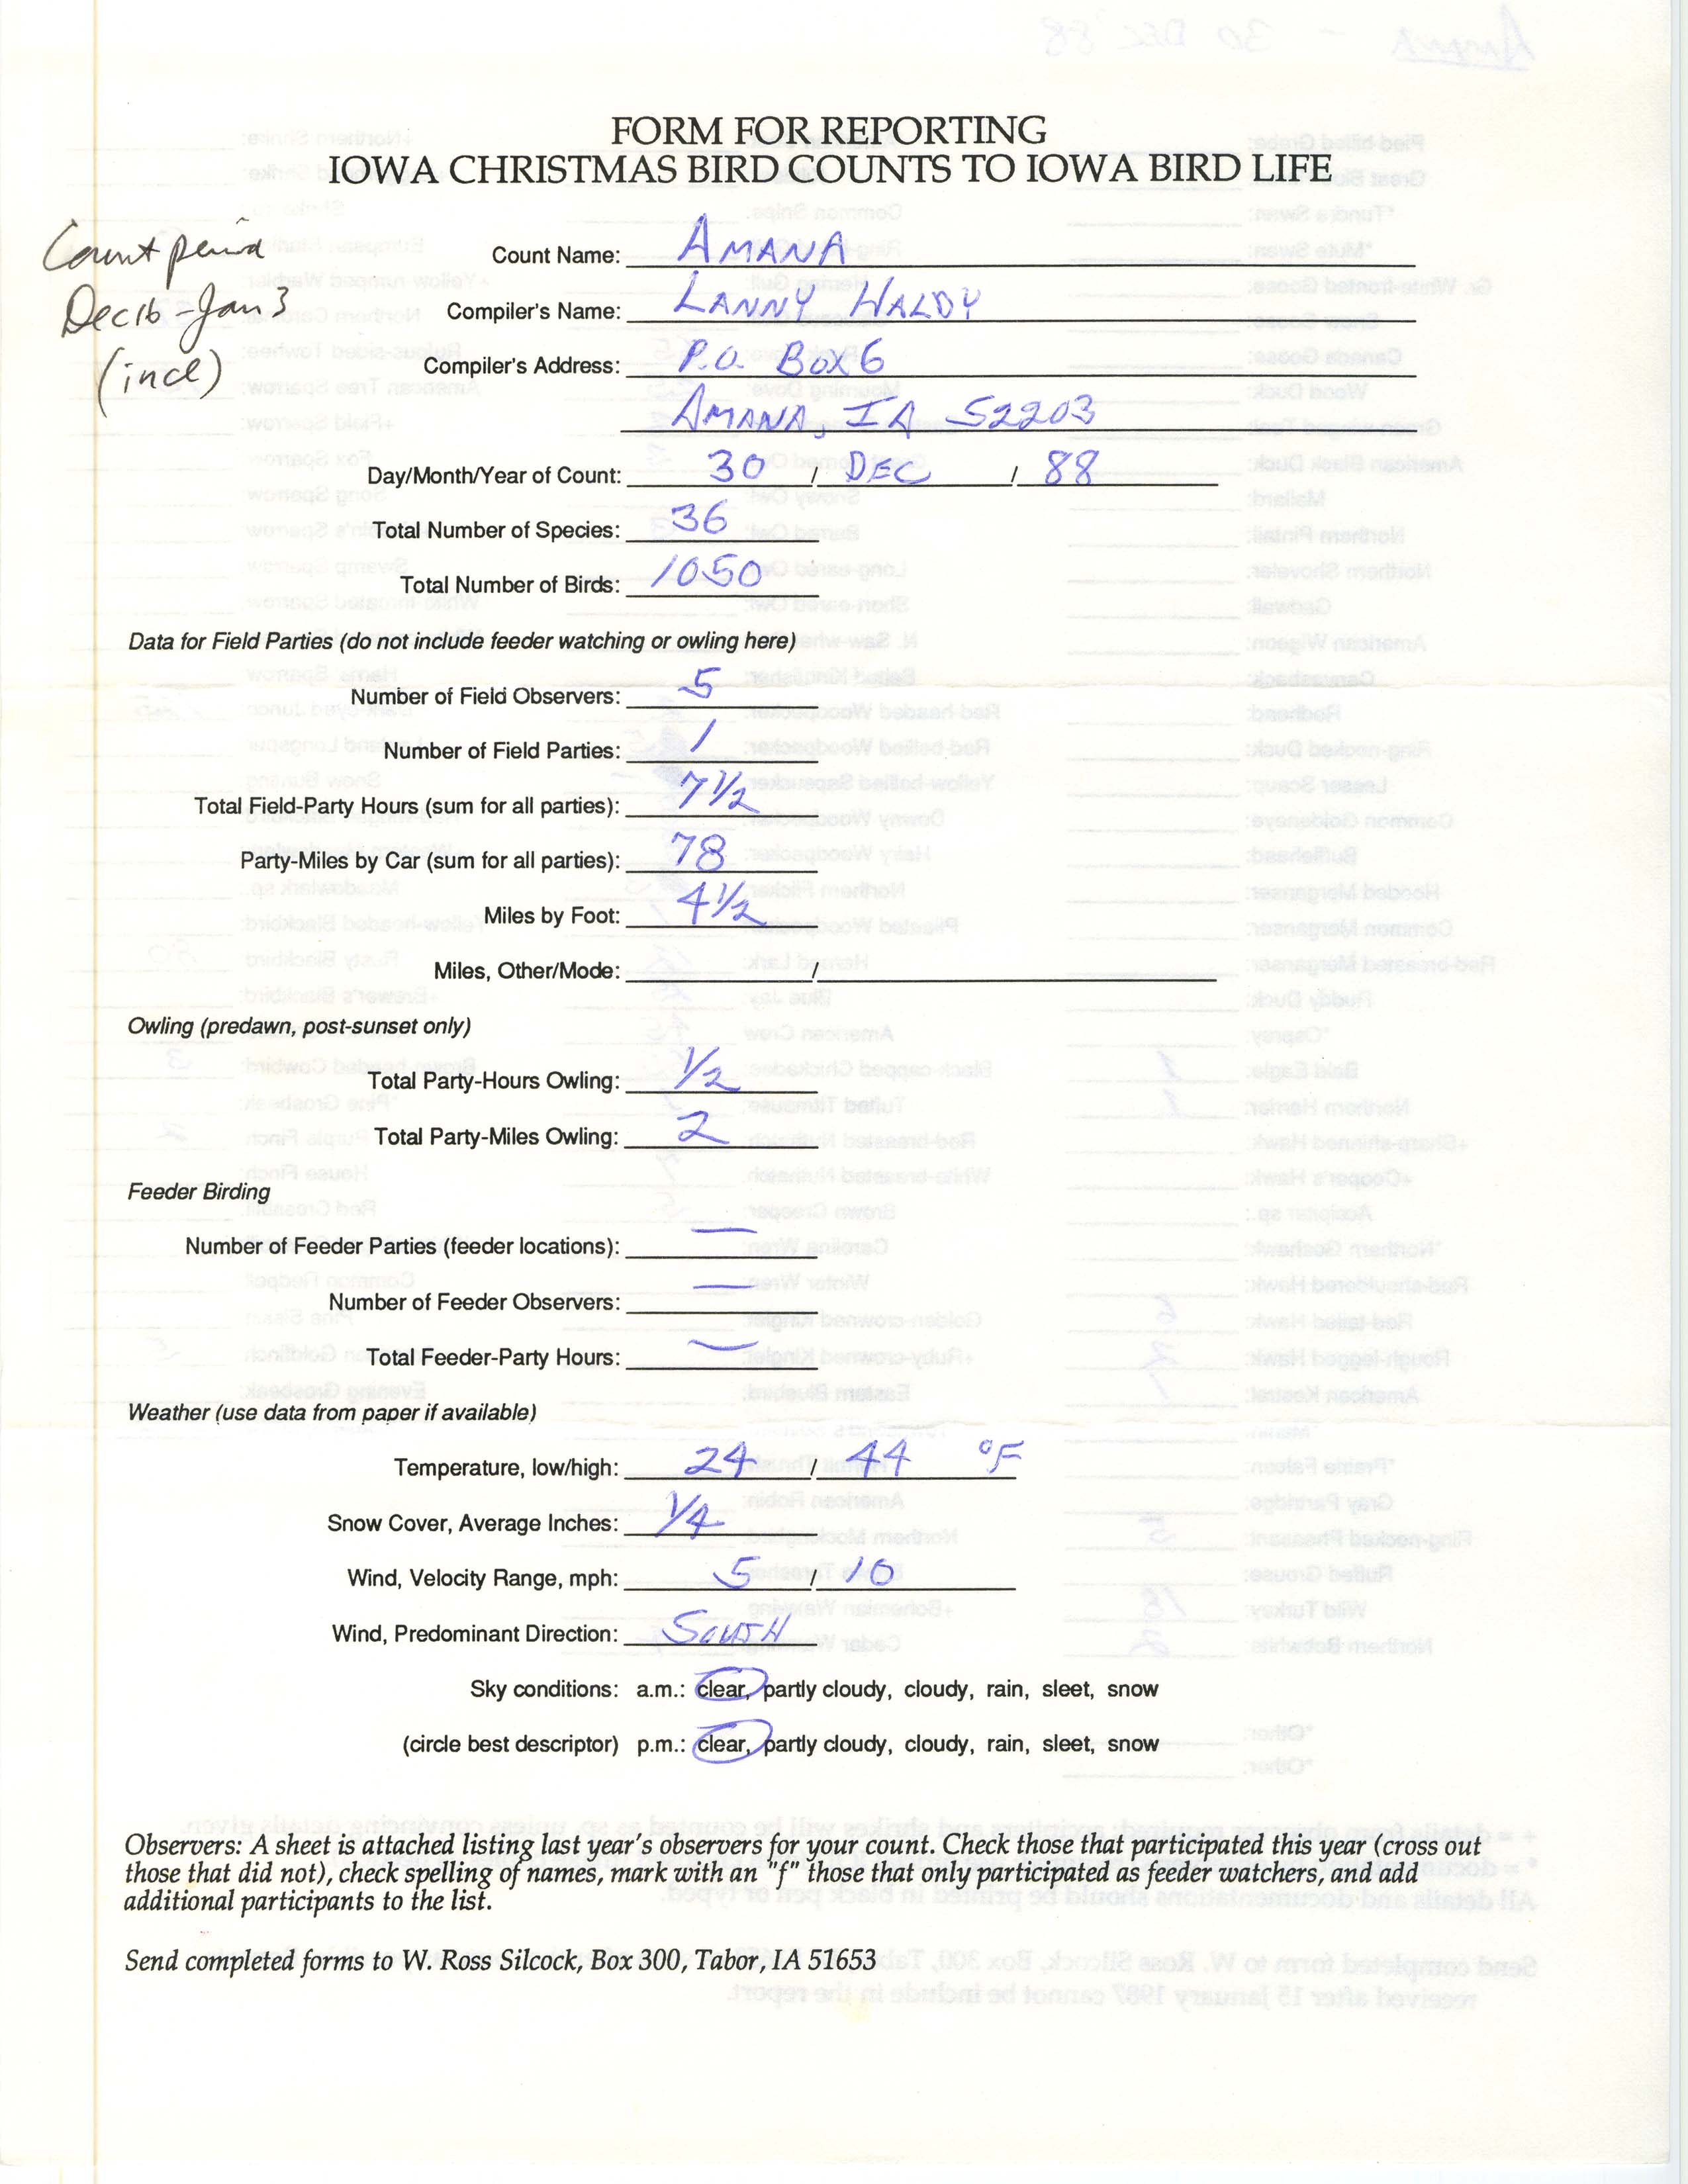 Form for reporting Iowa Christmas bird counts to Iowa Bird Life, Lanny Haldy, December 30, 1988